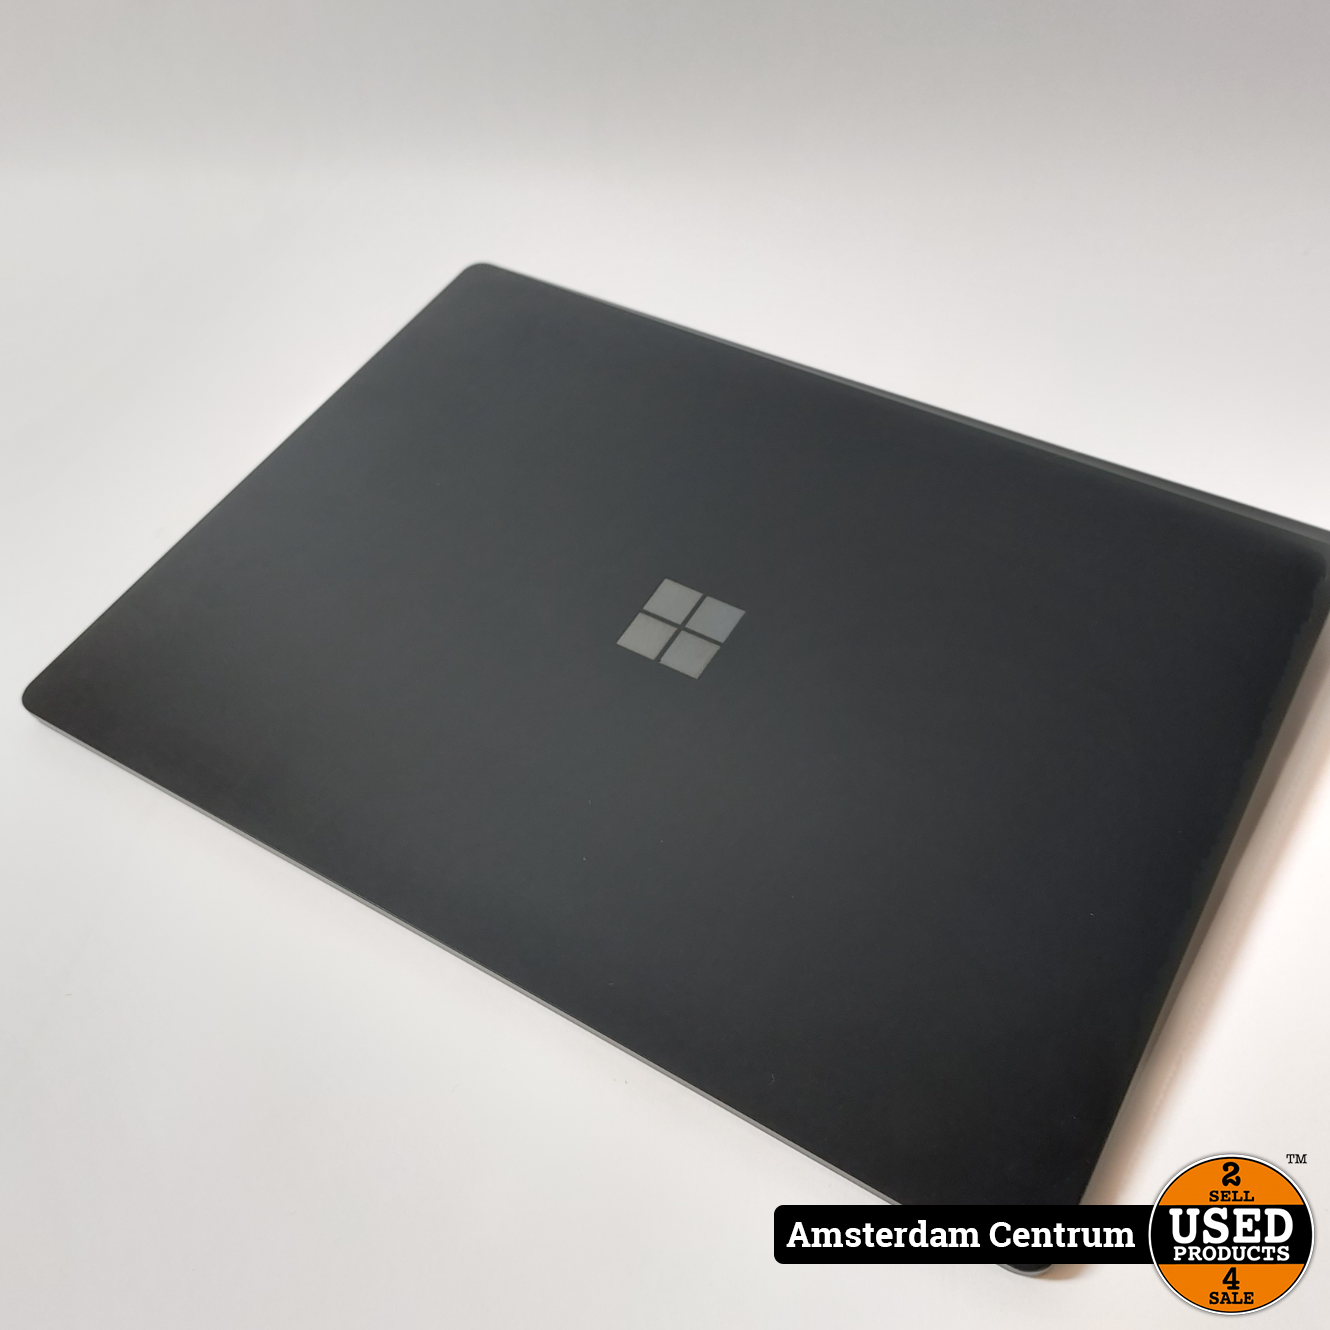 Fictief fout boeket Microsoft Surface Laptop 4 Intel core i7 11gen - Used Products Amsterdam  Centrum